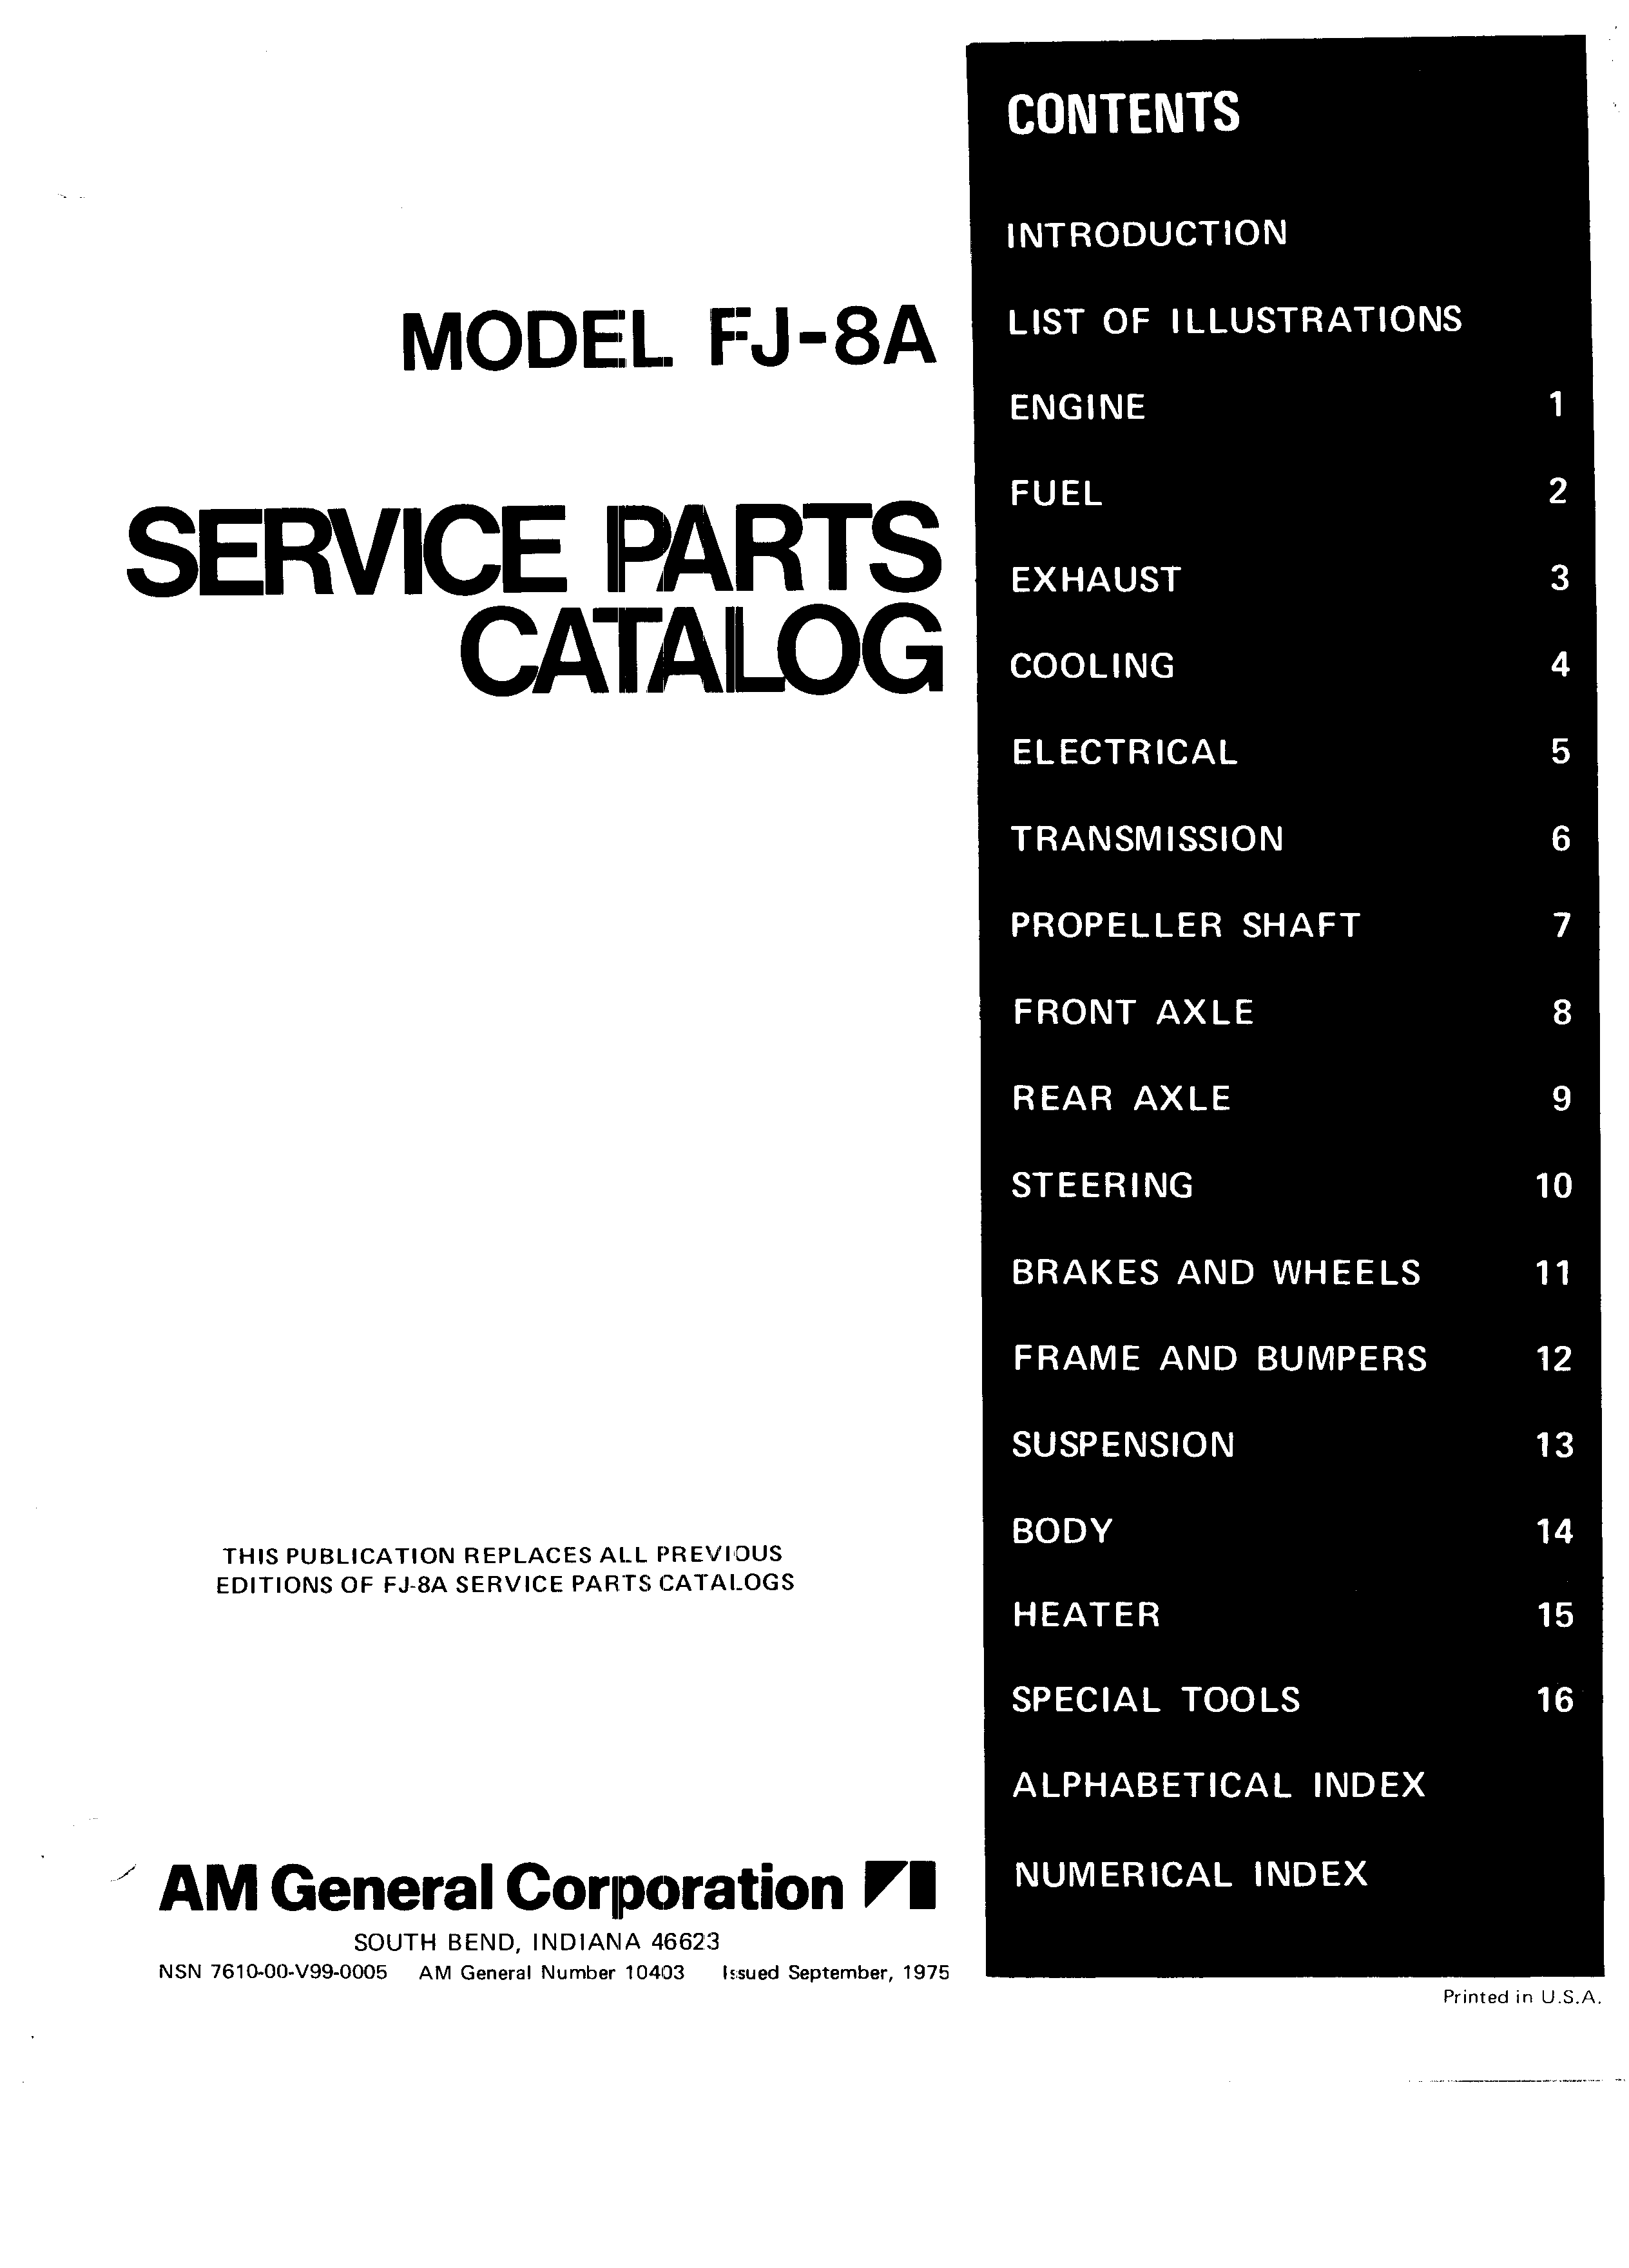 Model FJ-8A Service Parts Catalog September 1975